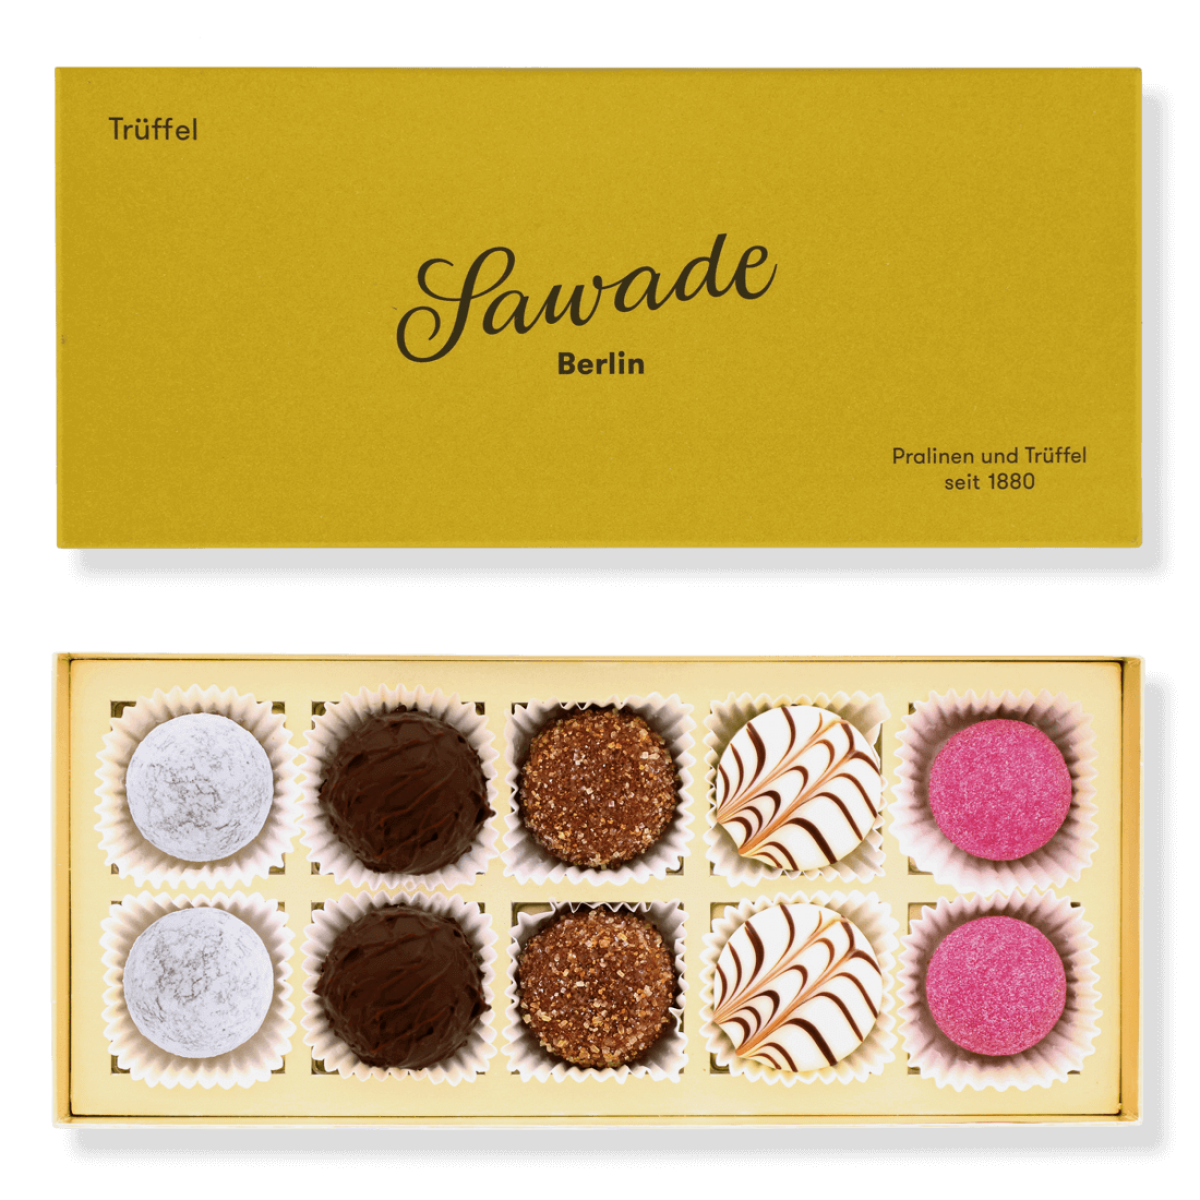 Sawade Chocolate Box Truffle